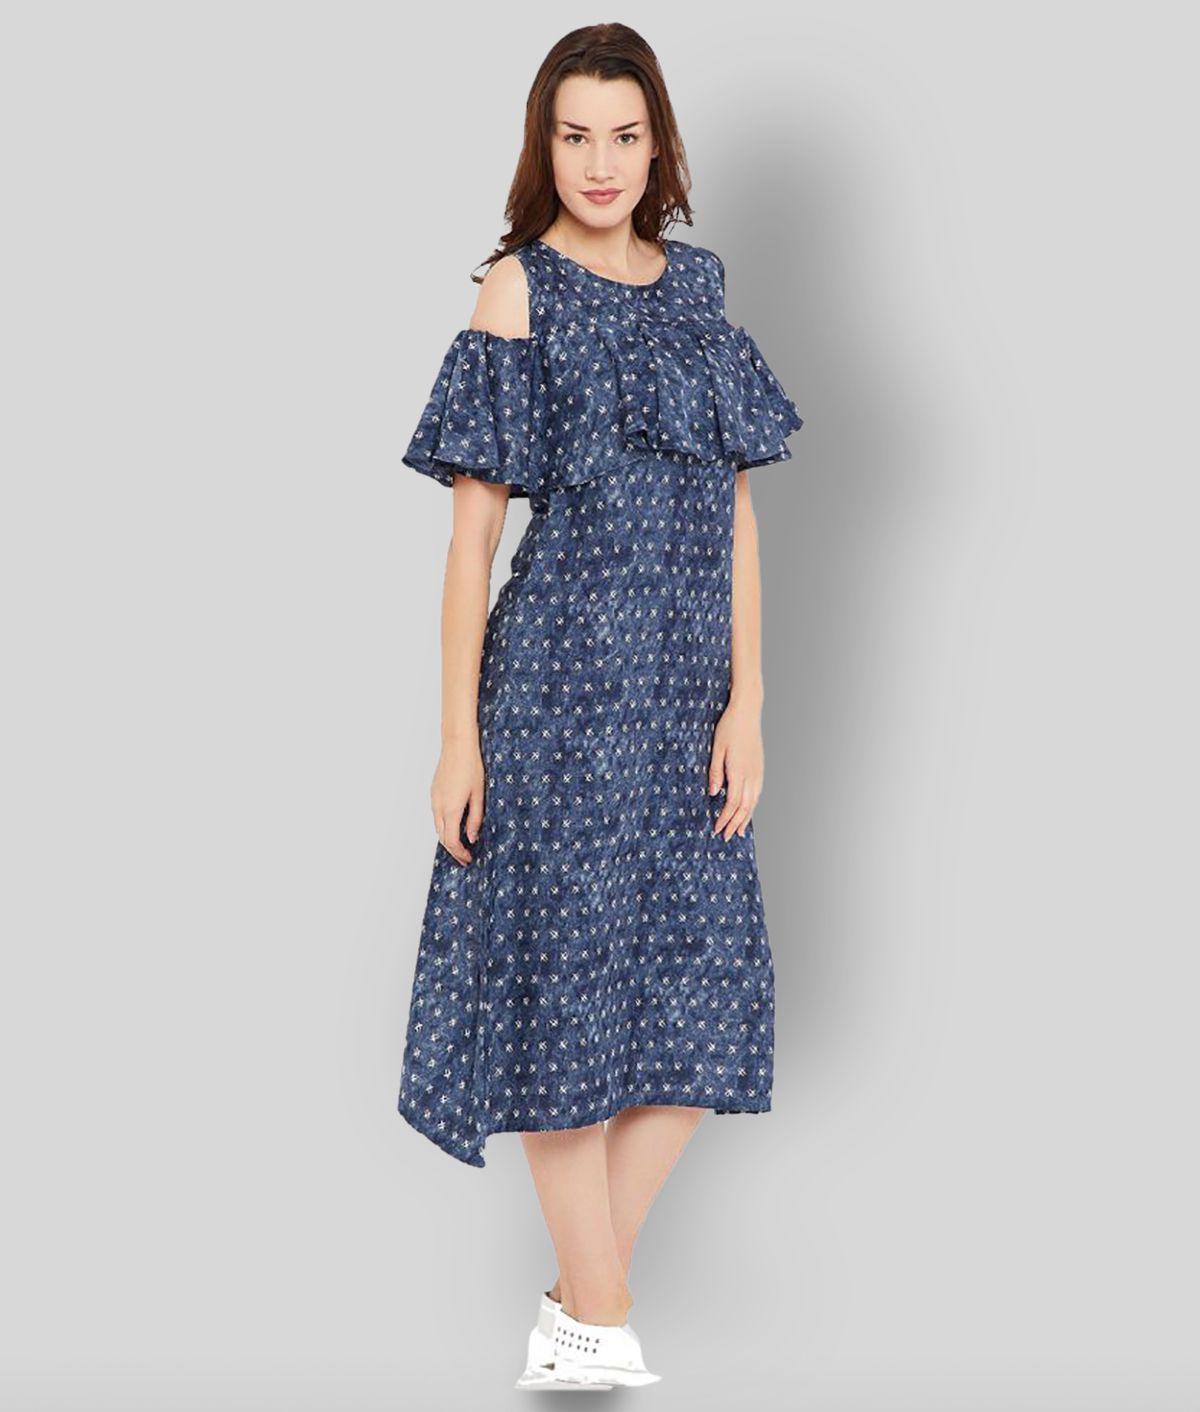 Cottinfab - Blue Cotton Blend Women's A-line Dress ( Pack of 1 )